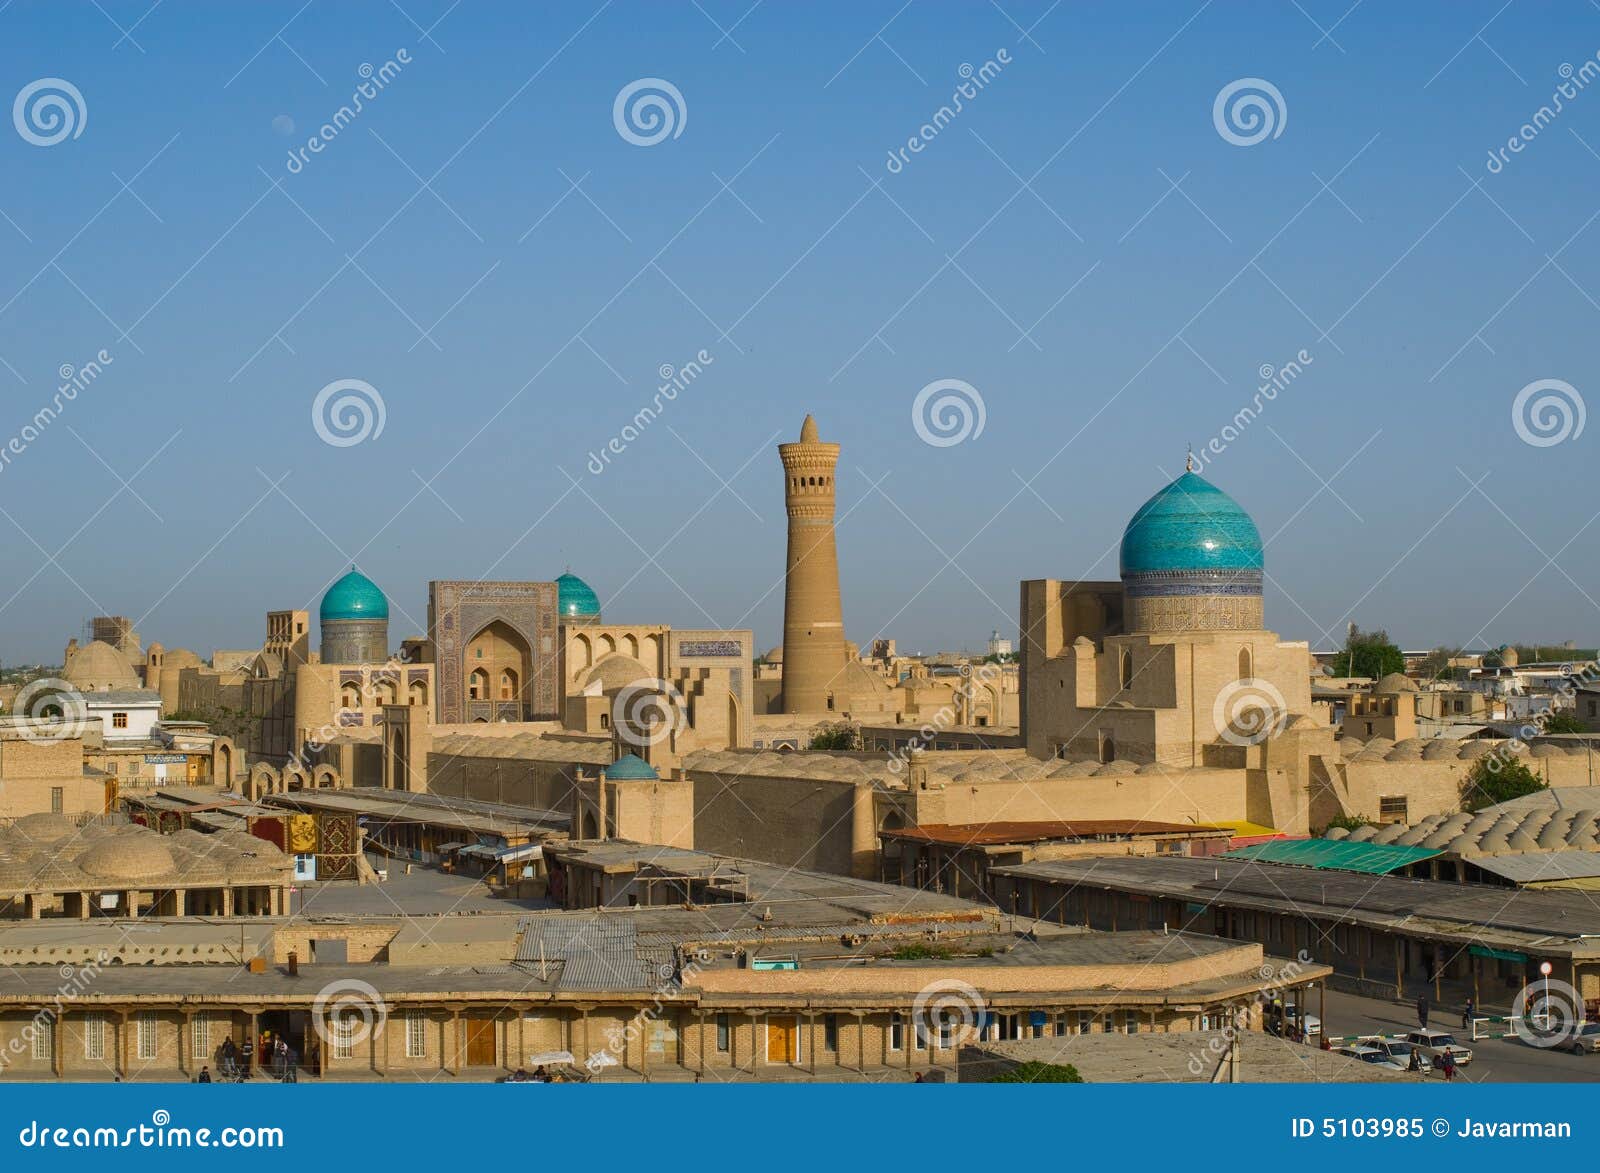 panorama of bukhara, uzbekistan